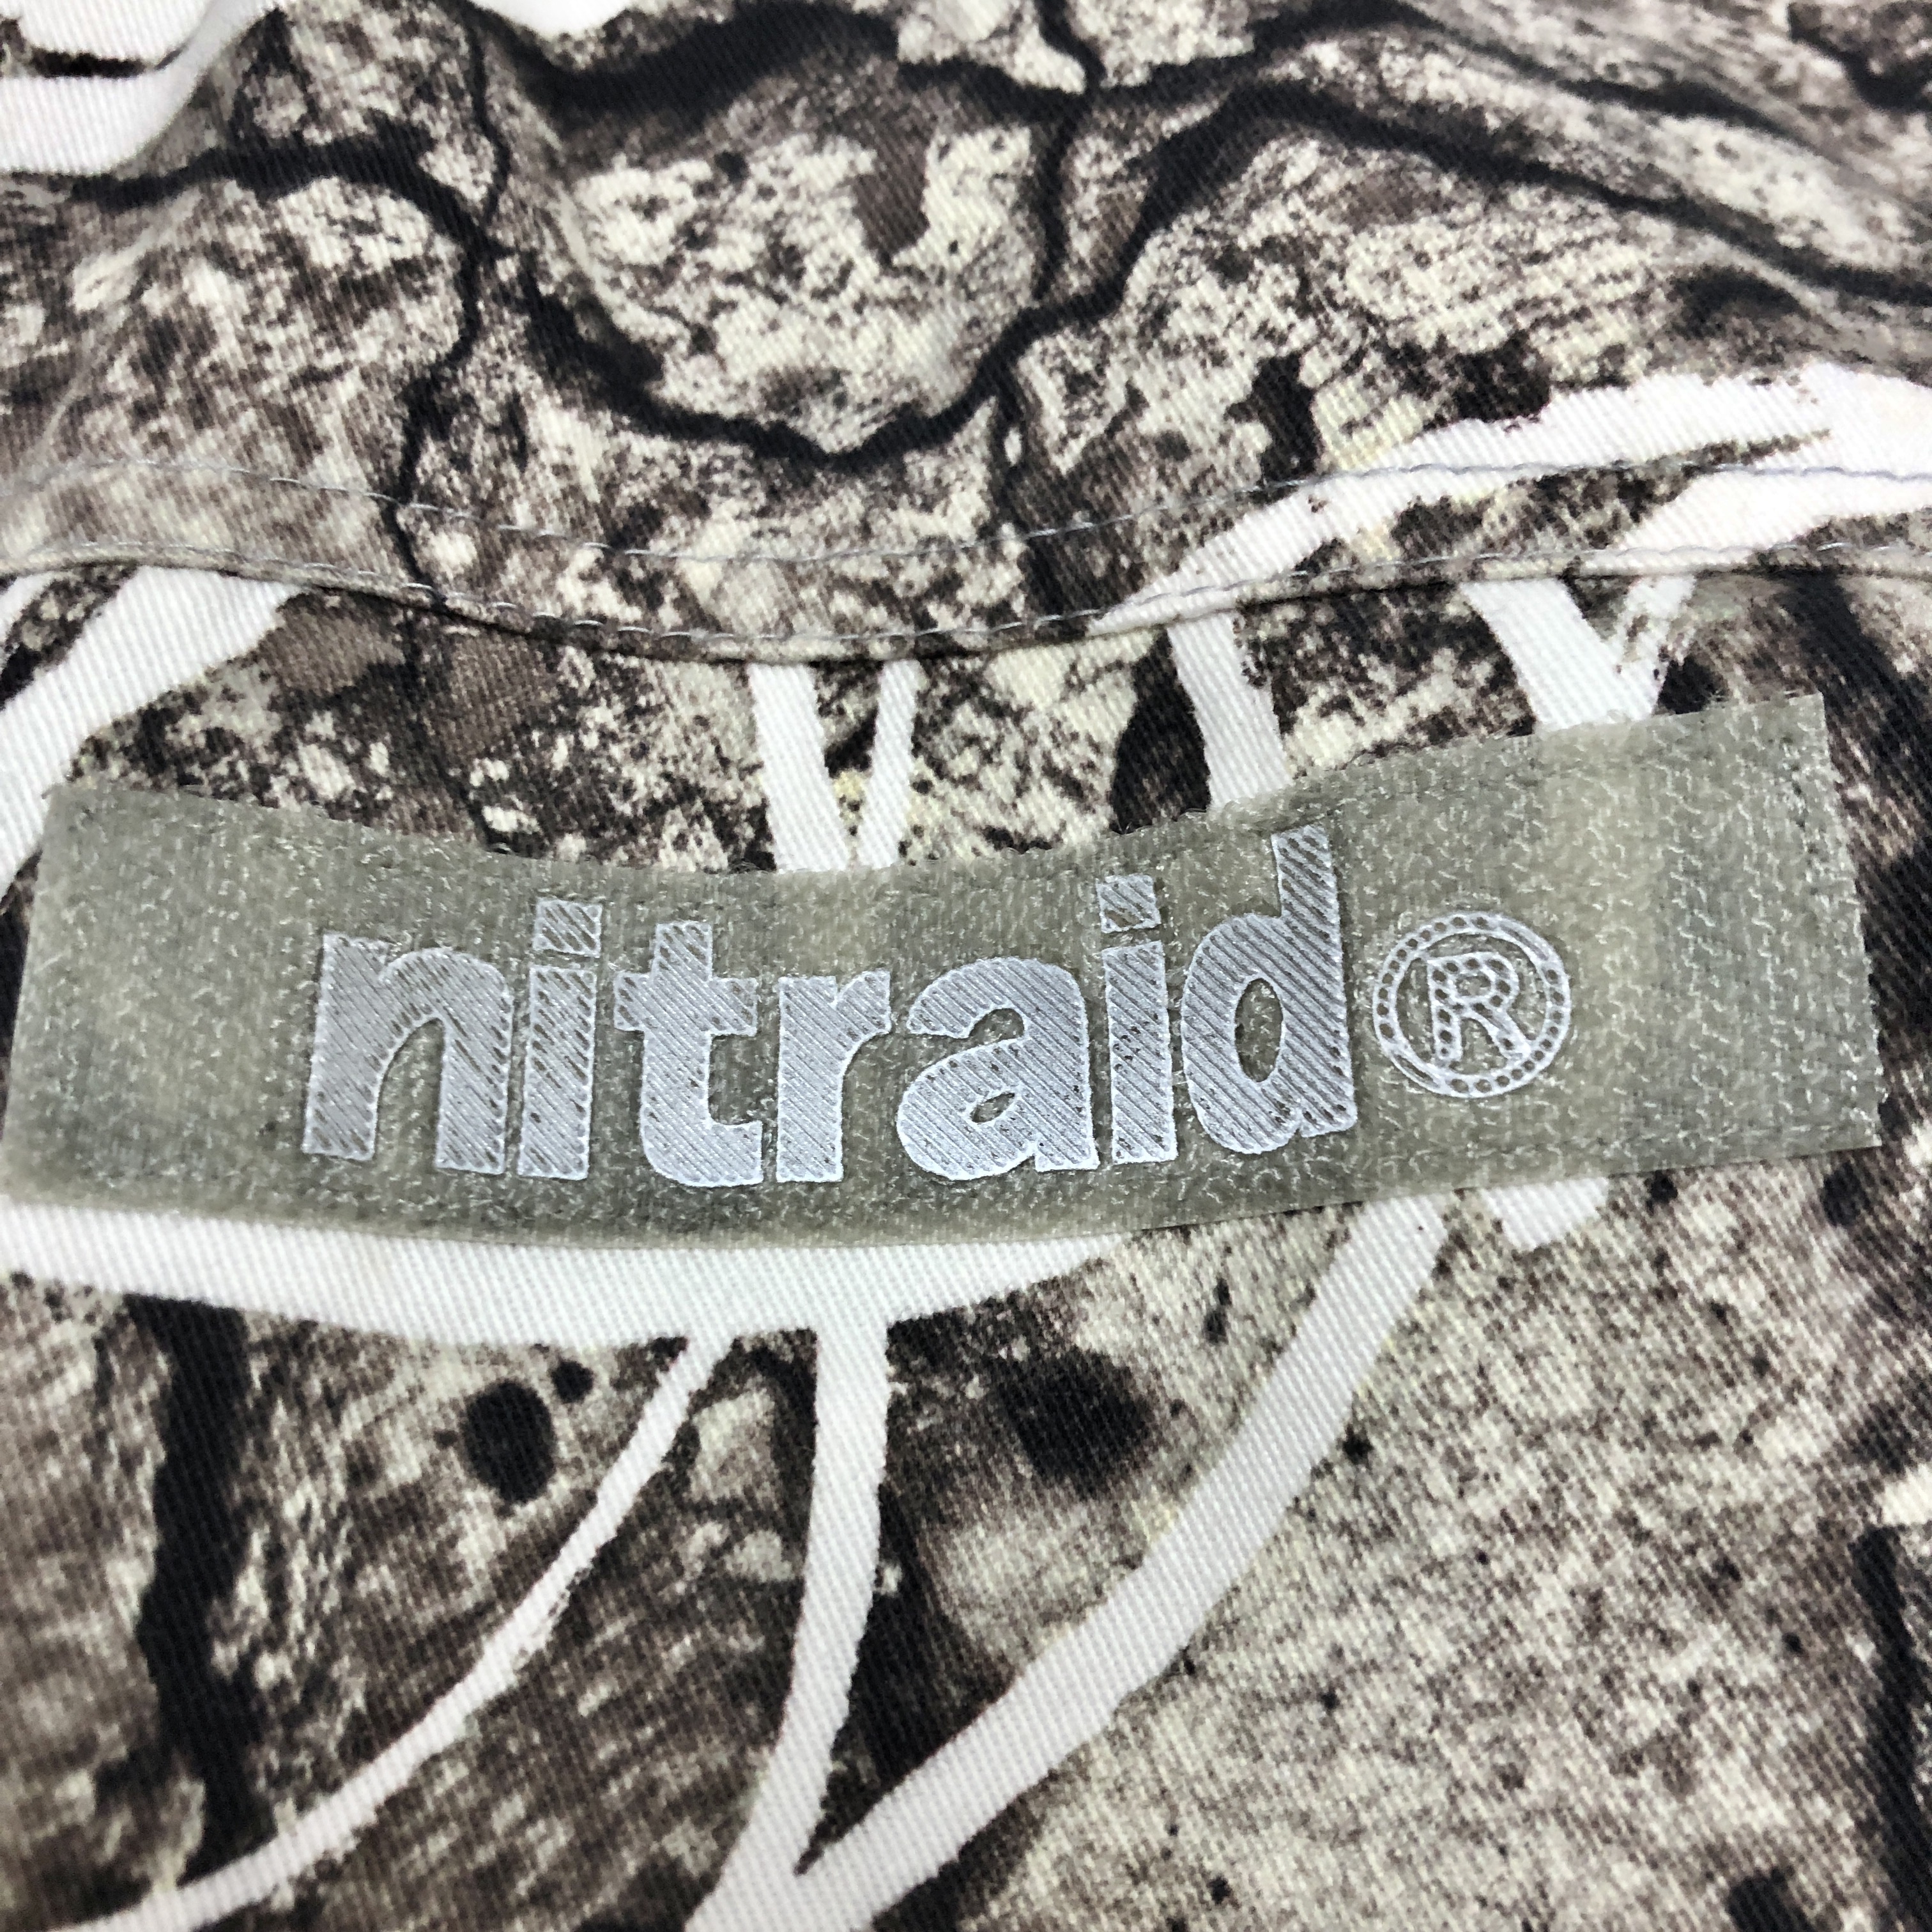 NITRAID×FUTURA/Real Stone Military Jacket/L/リアルストーン柄